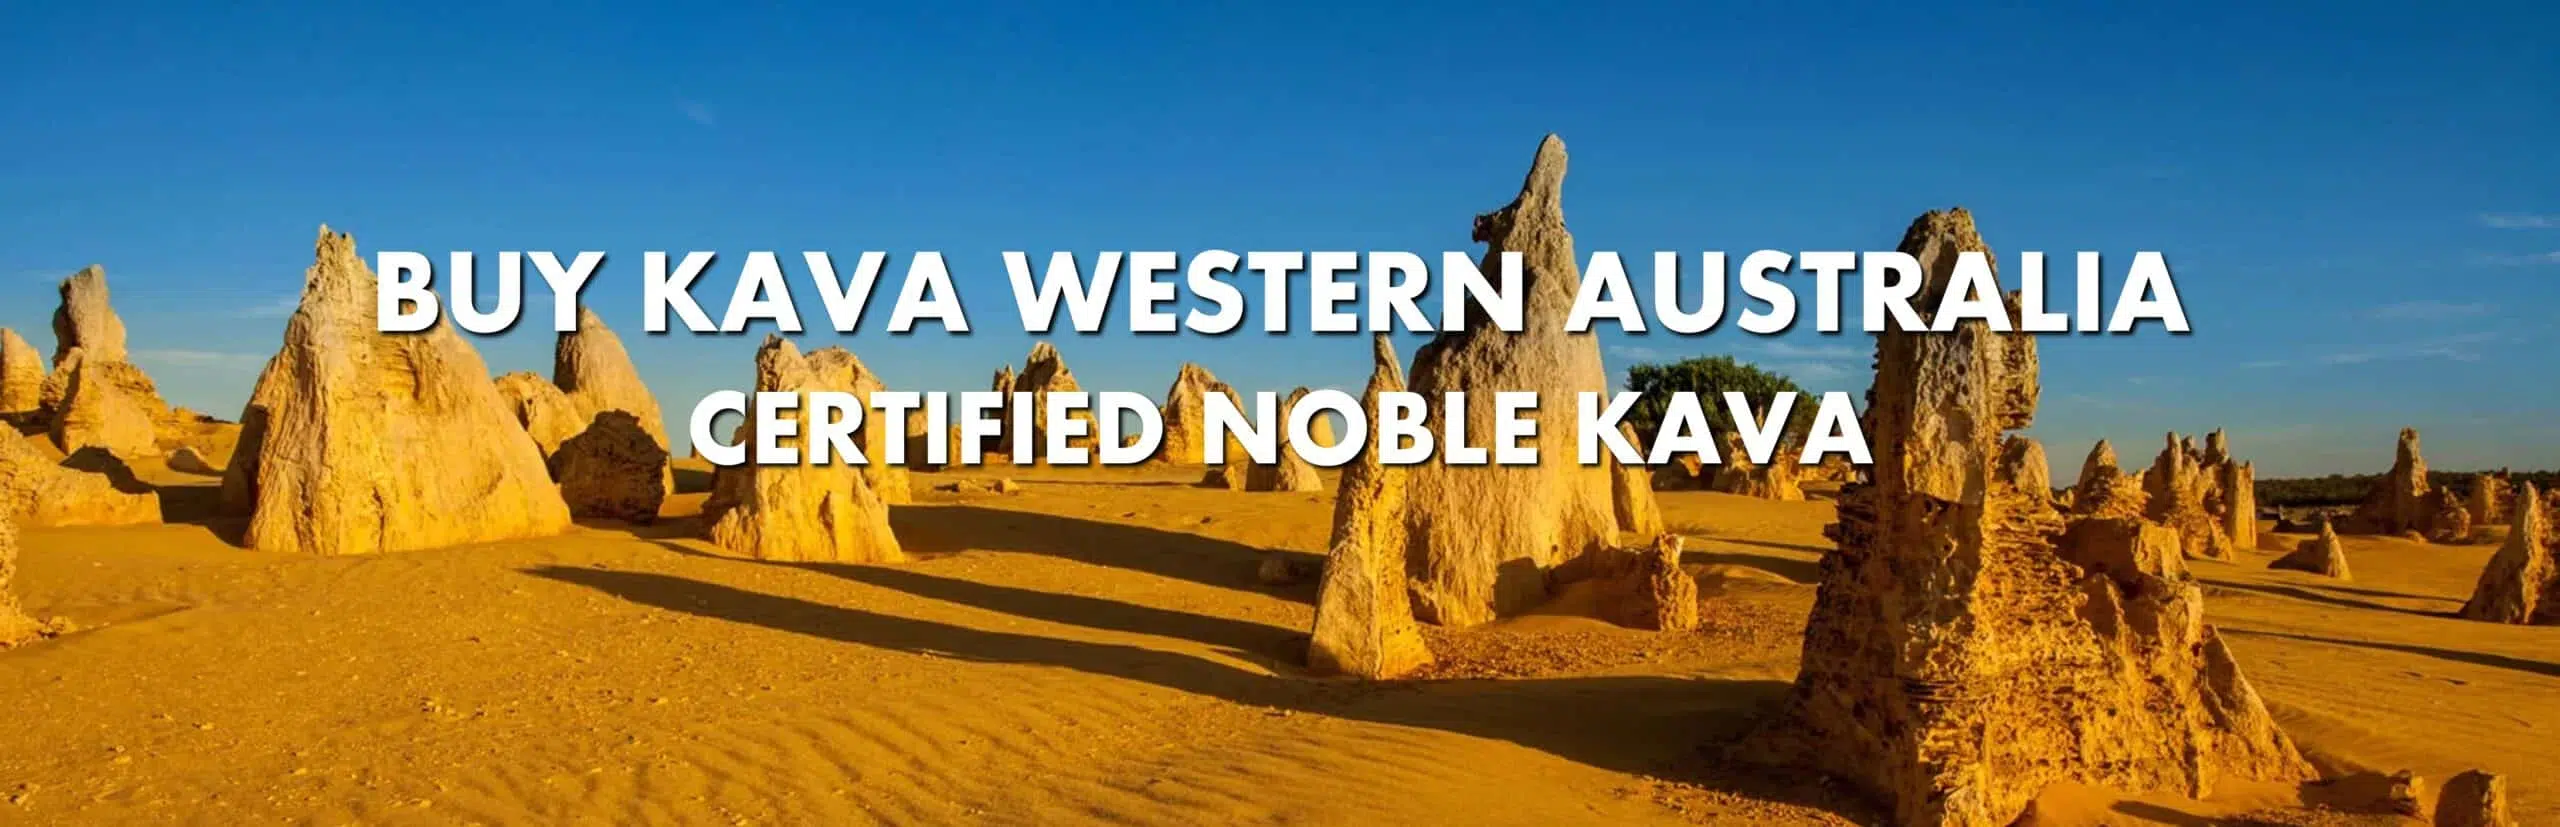 The Pinnacles Desert in Western Australia with caption Buy Kava Western Australia